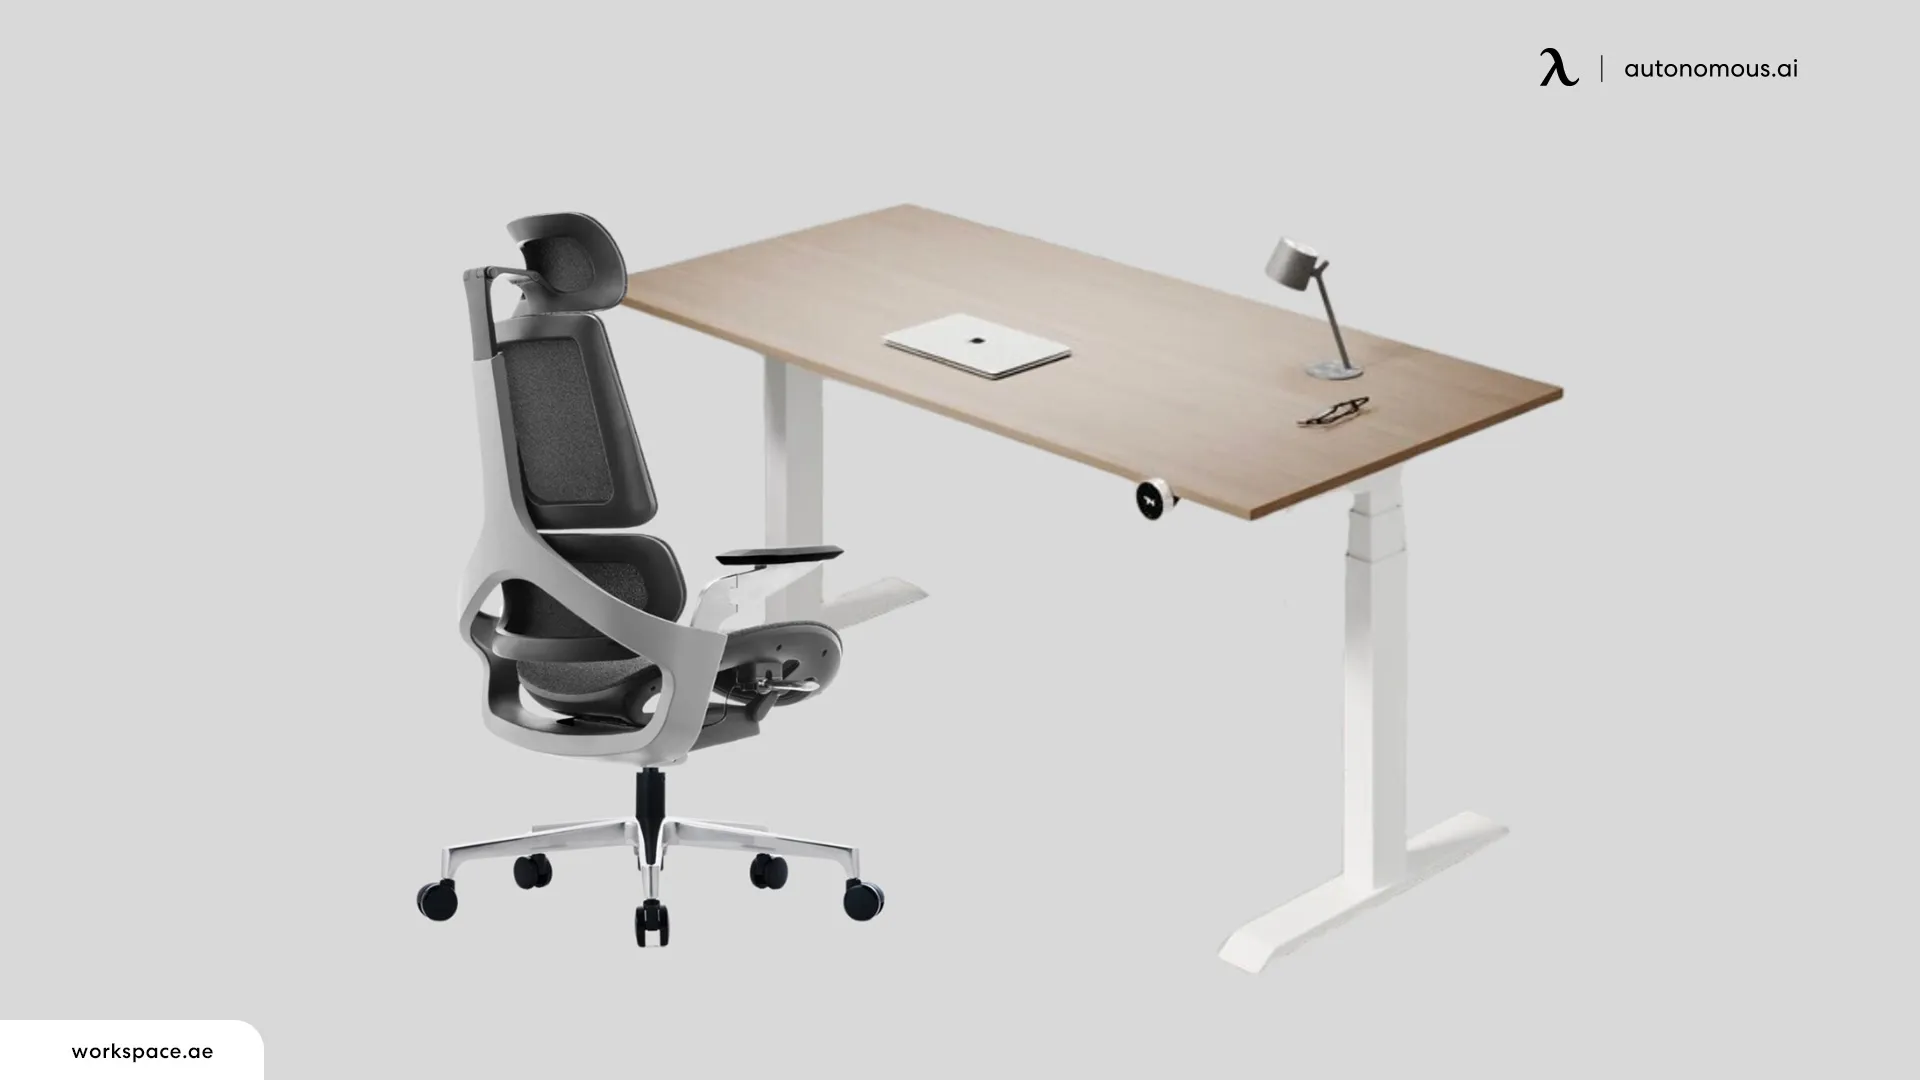 Mirage Super Ergonomic Executive Chair & Max Series Dual Motor Electric Height Adjustable Standing Desks